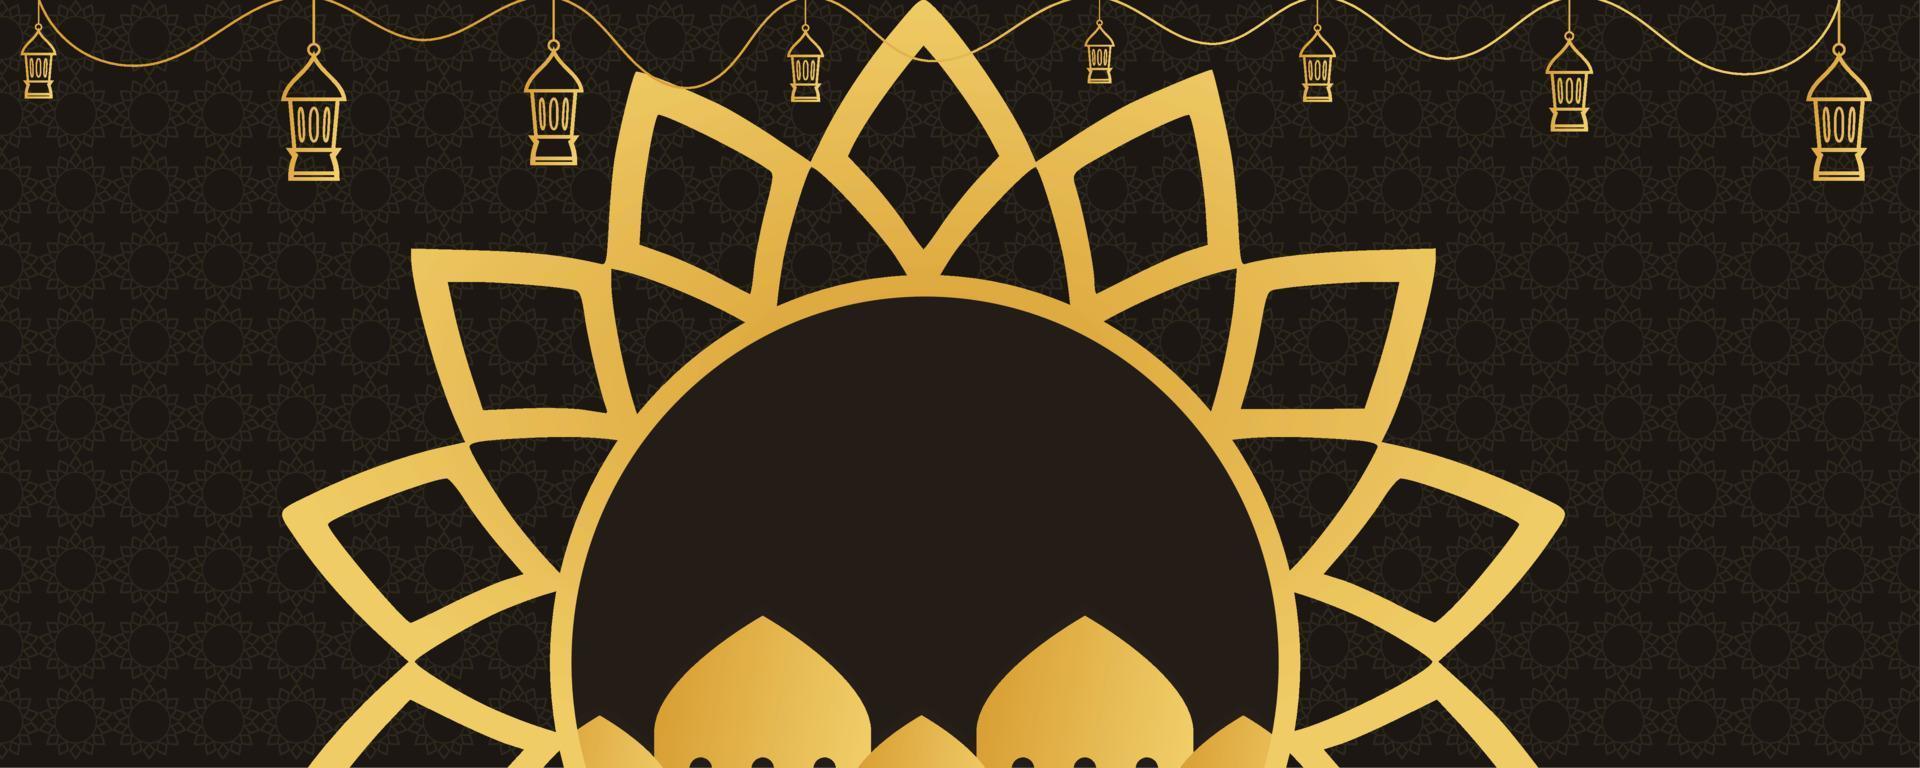 Luxury of Islamic Background. Good to use for Ramadan Kareem and Ied Mubarak Theme. vector